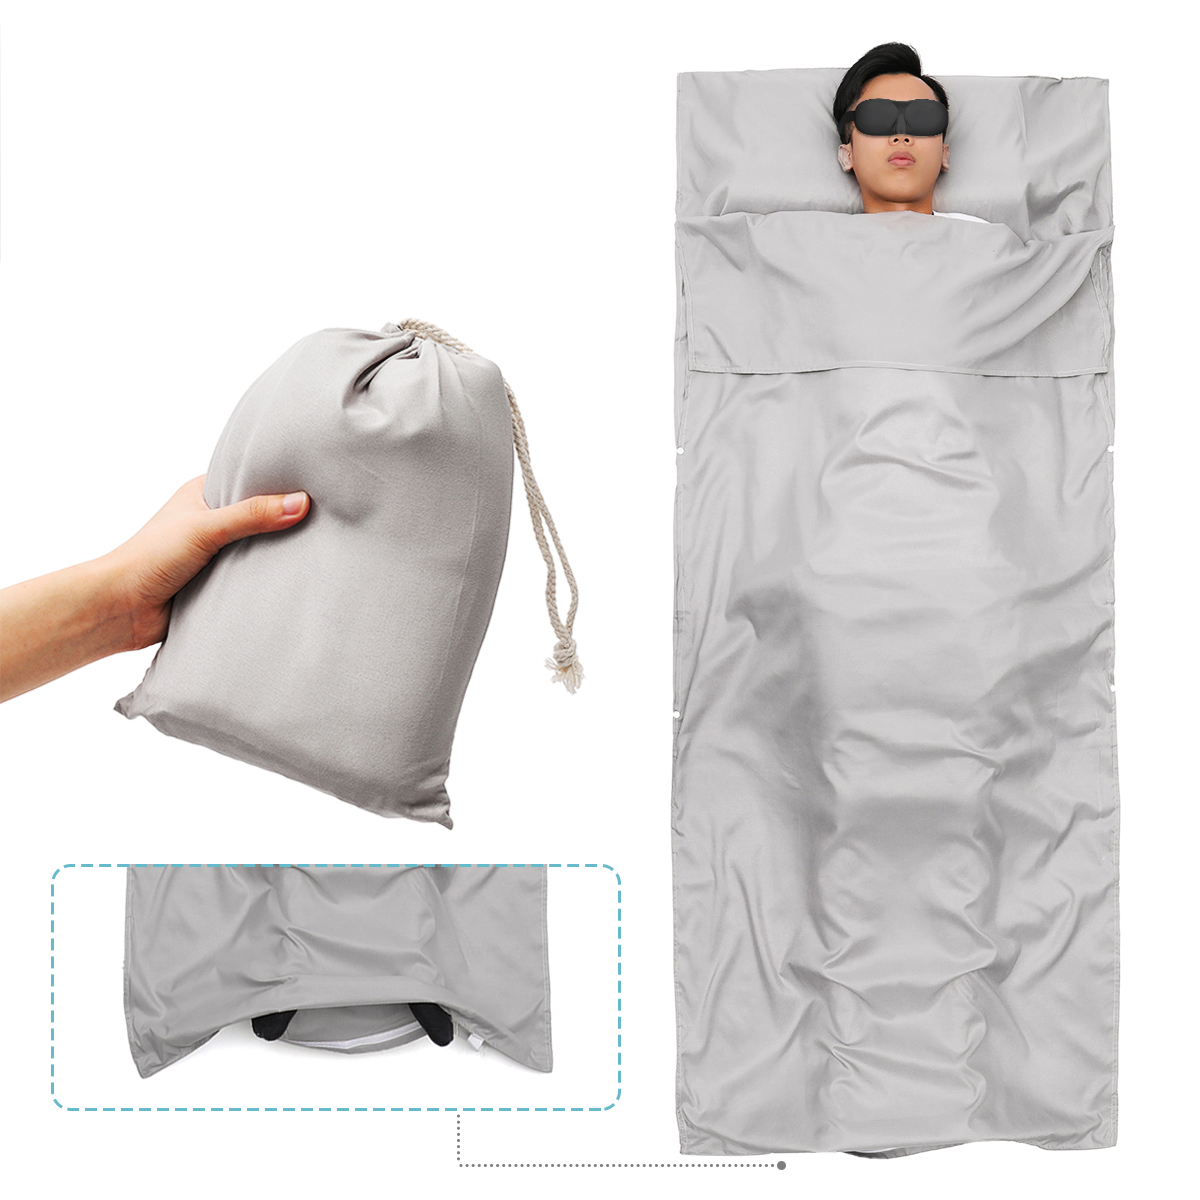 Portable-Sleeping-Bag-Cover-Ultralight-Sleep-Sheet-Outdoor-Camping-Hiking-Travel-Bag-1883995-2